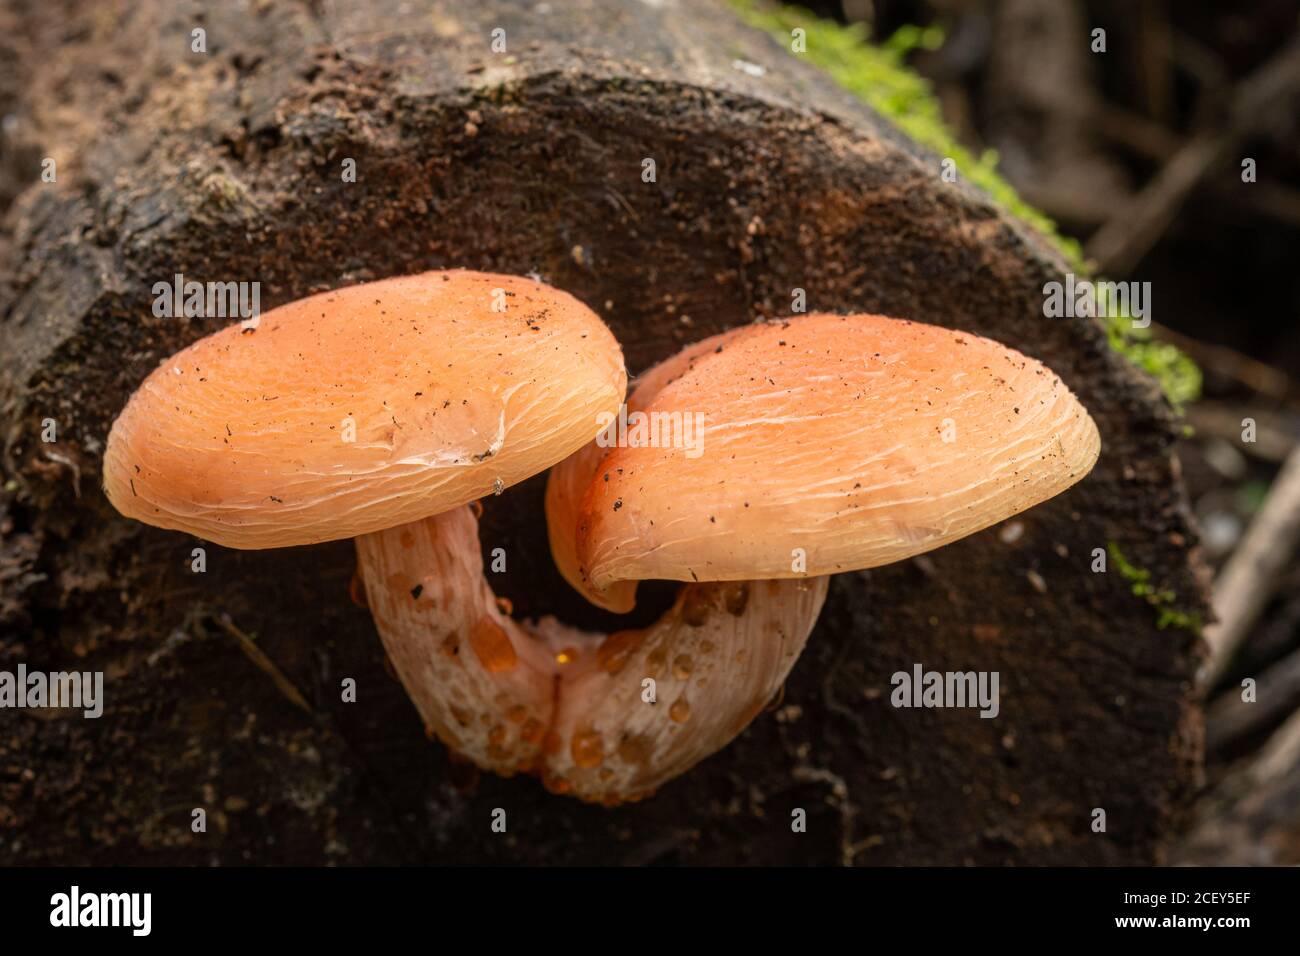 Wrinkled peach fungus (Rhodotus palmatus) growing on a log, UK Stock Photo